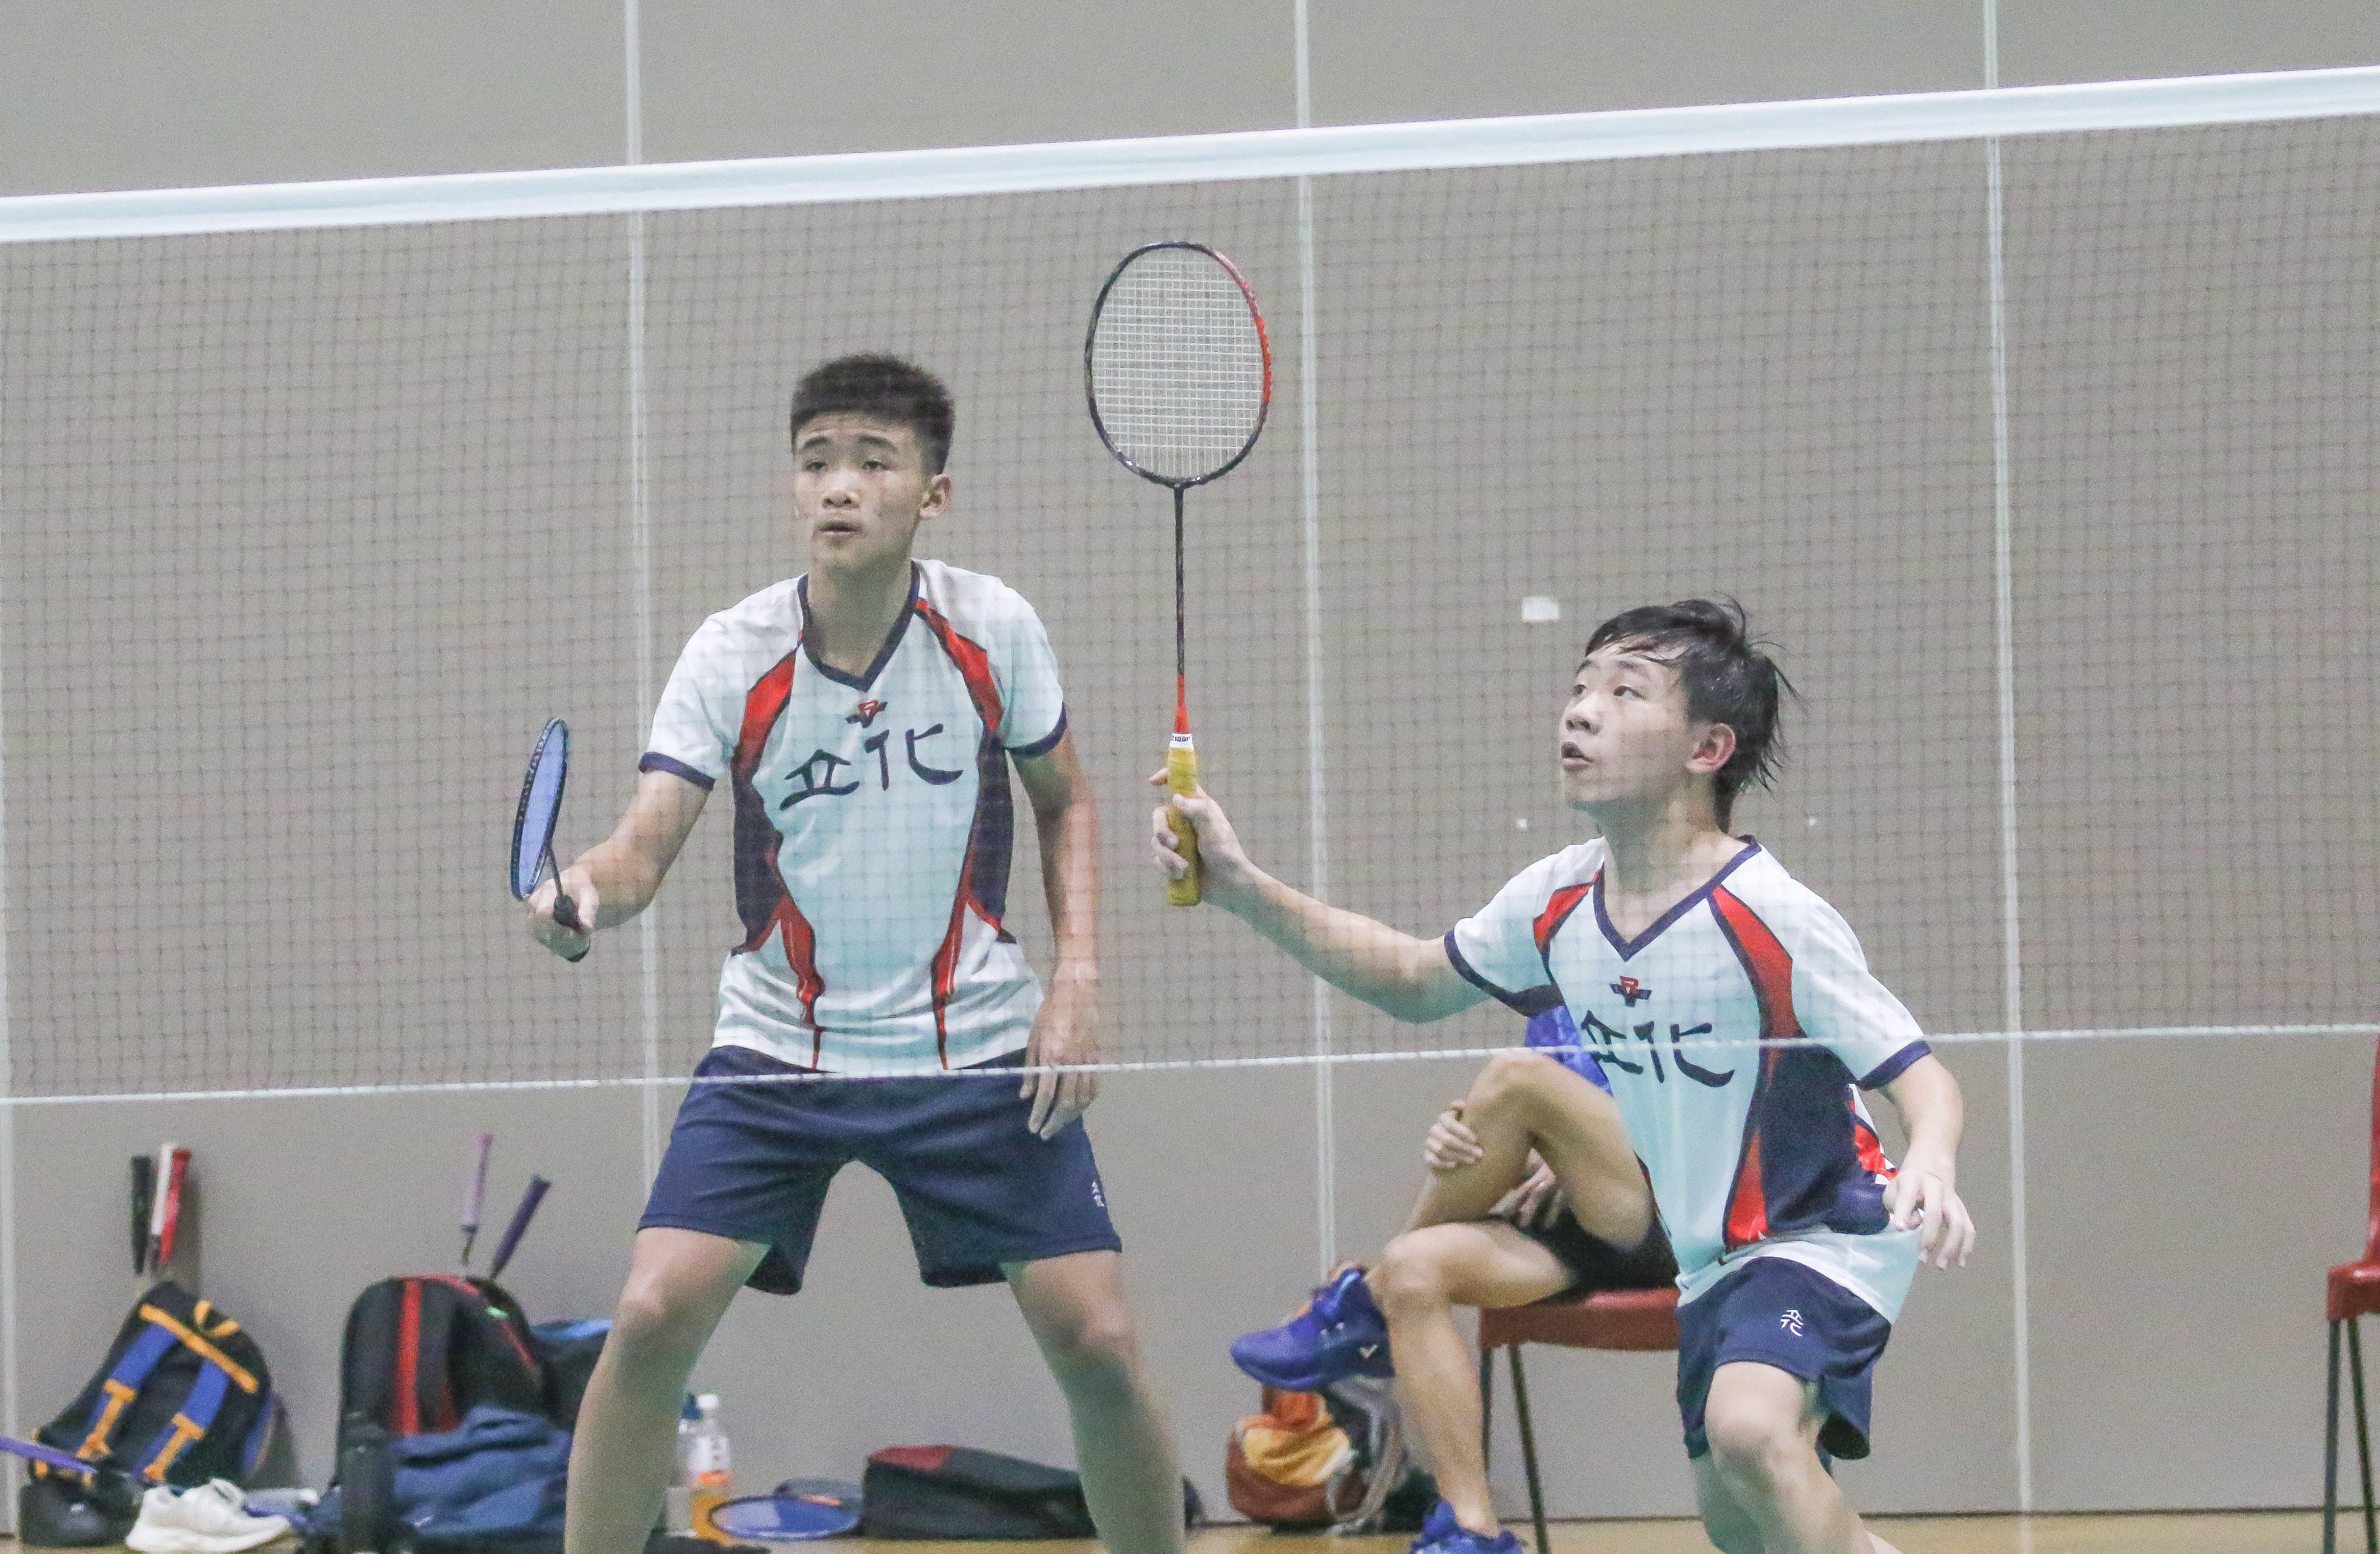 2023-05-17_Badminton_By Chin KK_IFP_1867_edited